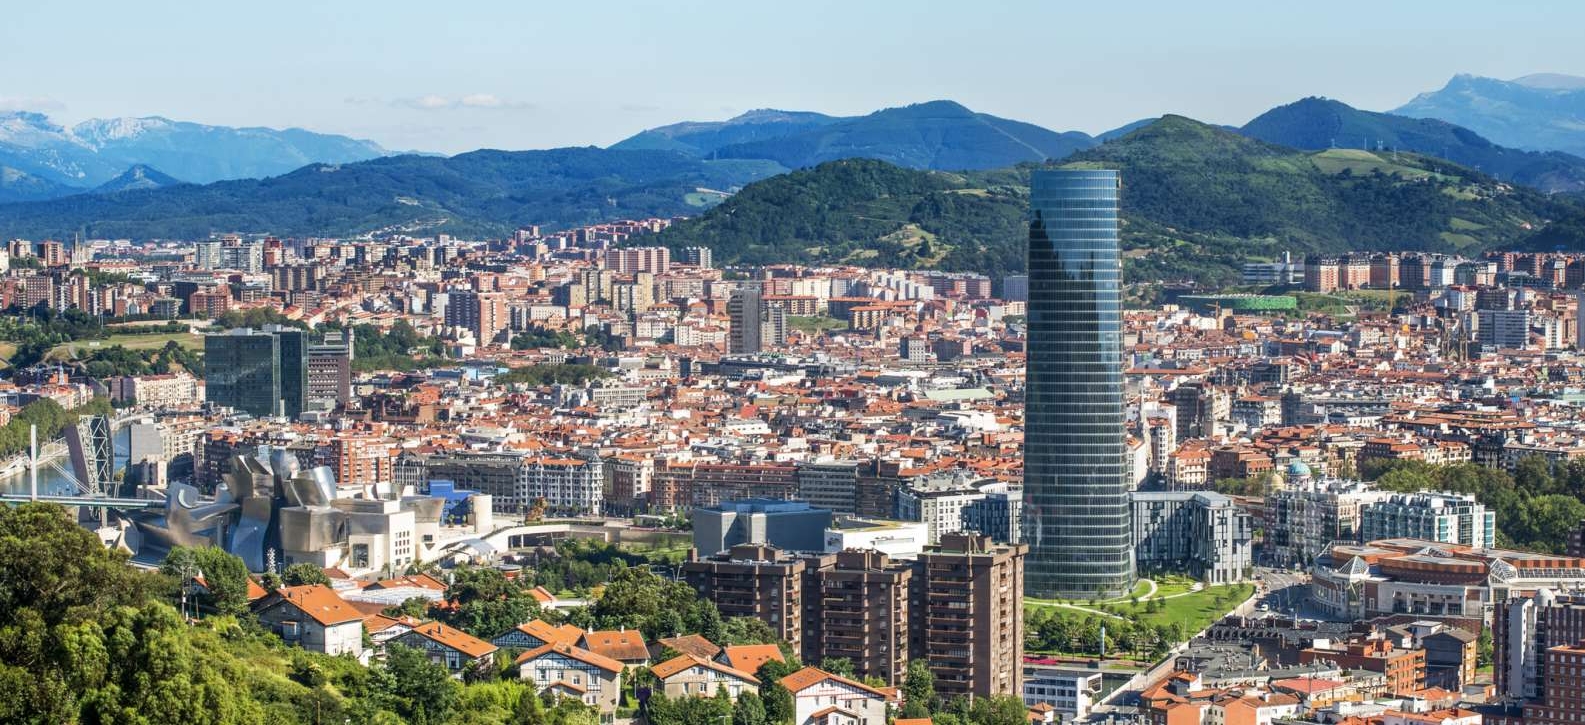 Picture of Bilbao, my hometown